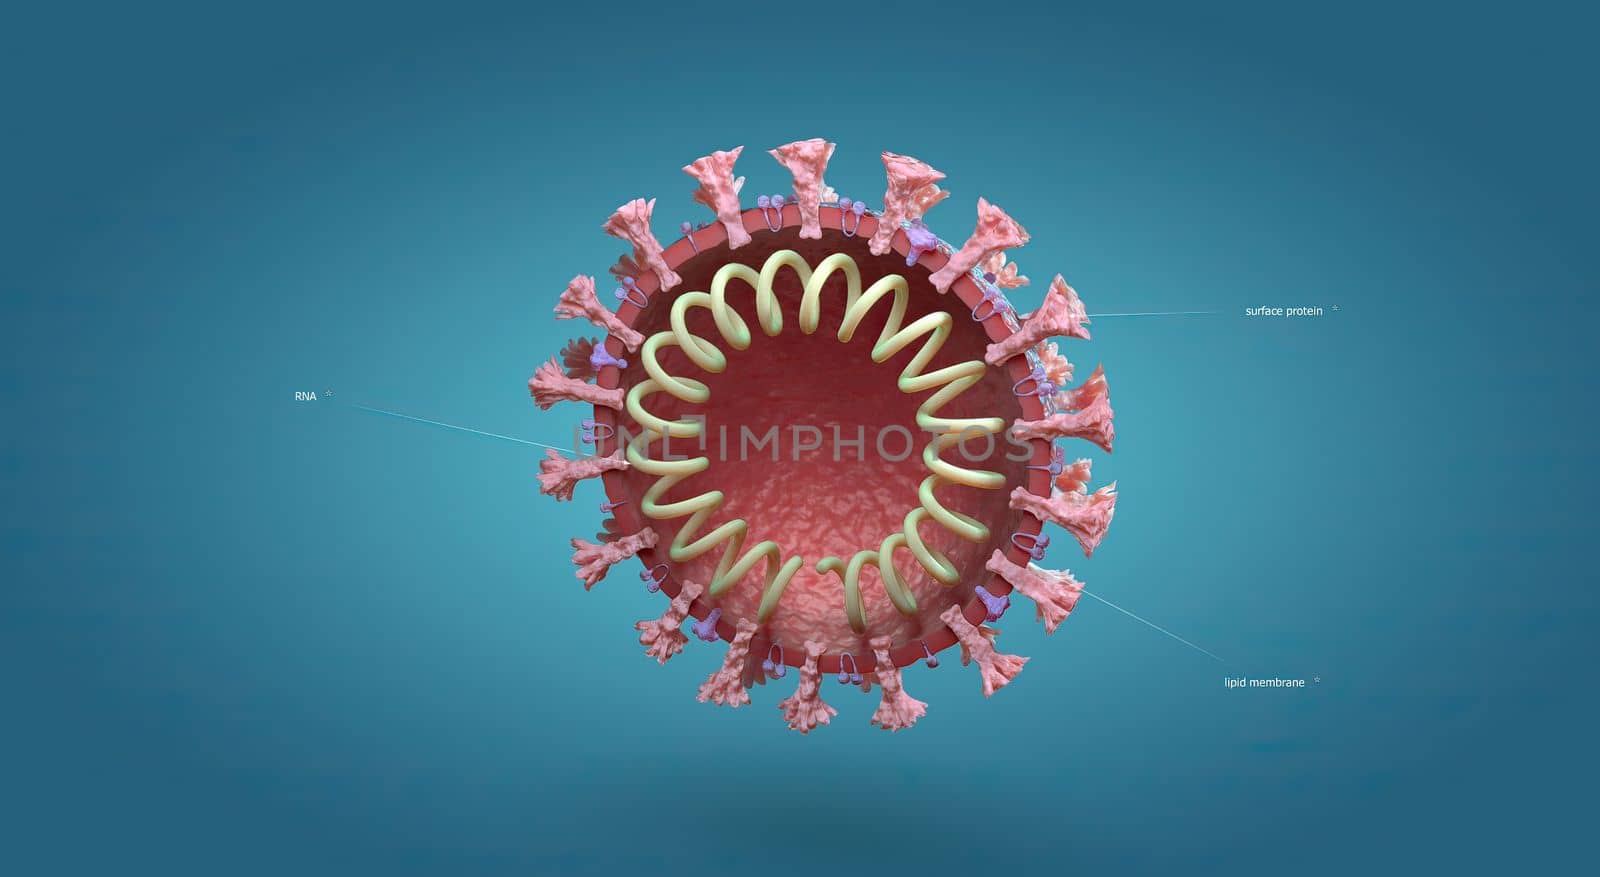 Influenza is a single-stranded RNA virus in the Orthomyxoviridae family.